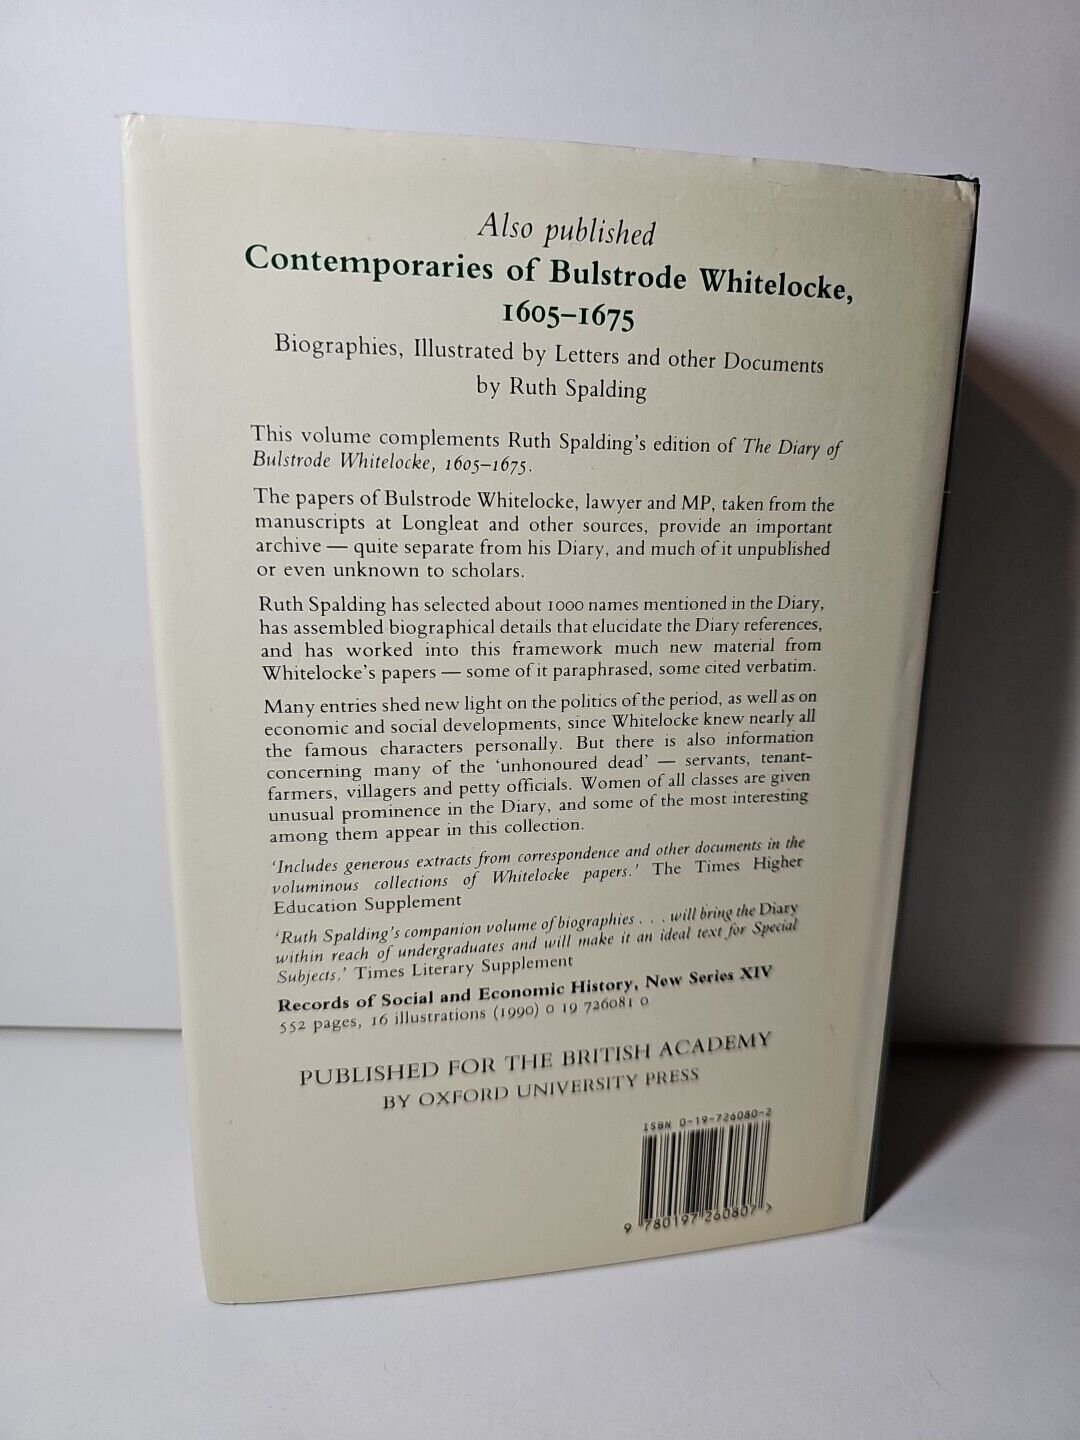 The Diary of Bulstrode Whitelocke 1605 - 1675 by Ruth Spalding (1991)